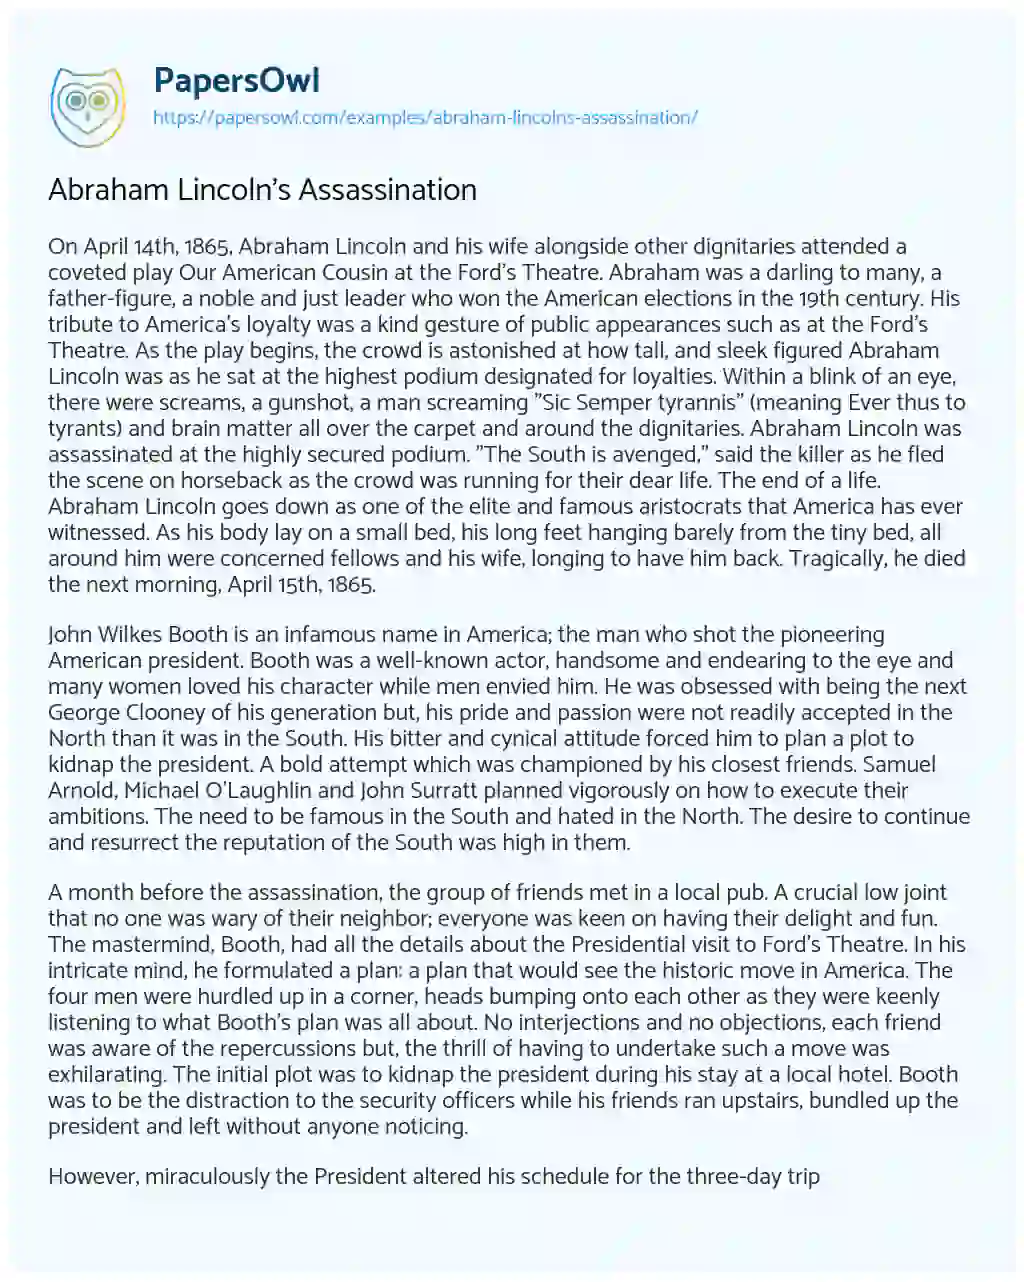 Essay on Abraham Lincoln’s Assassination